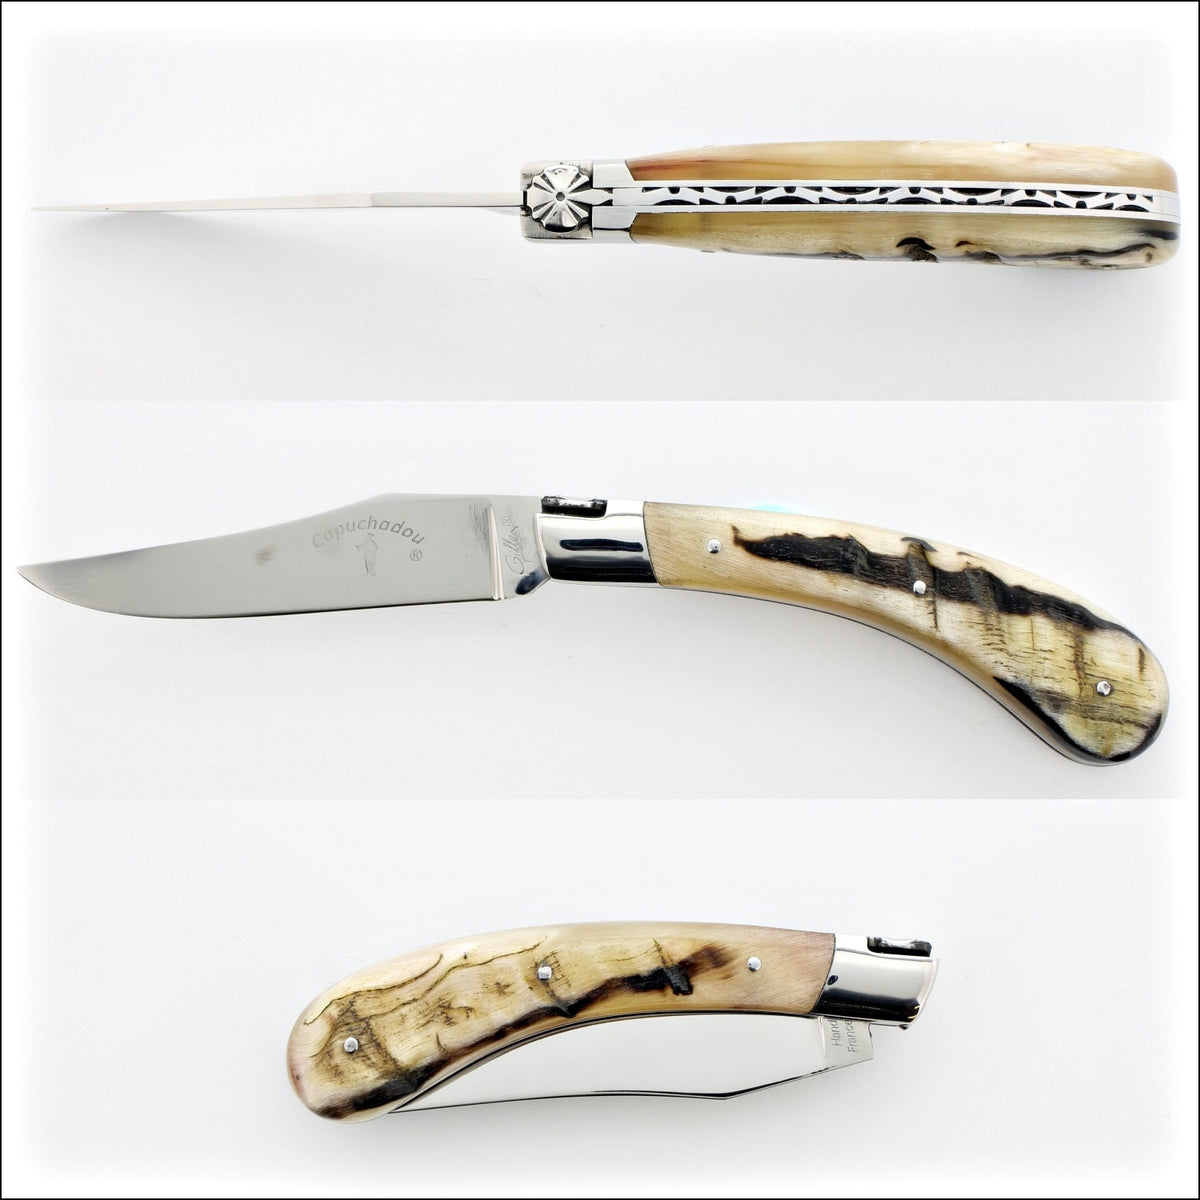 Capuchadou 12 cm Classic Folding Knife - Ram Horn